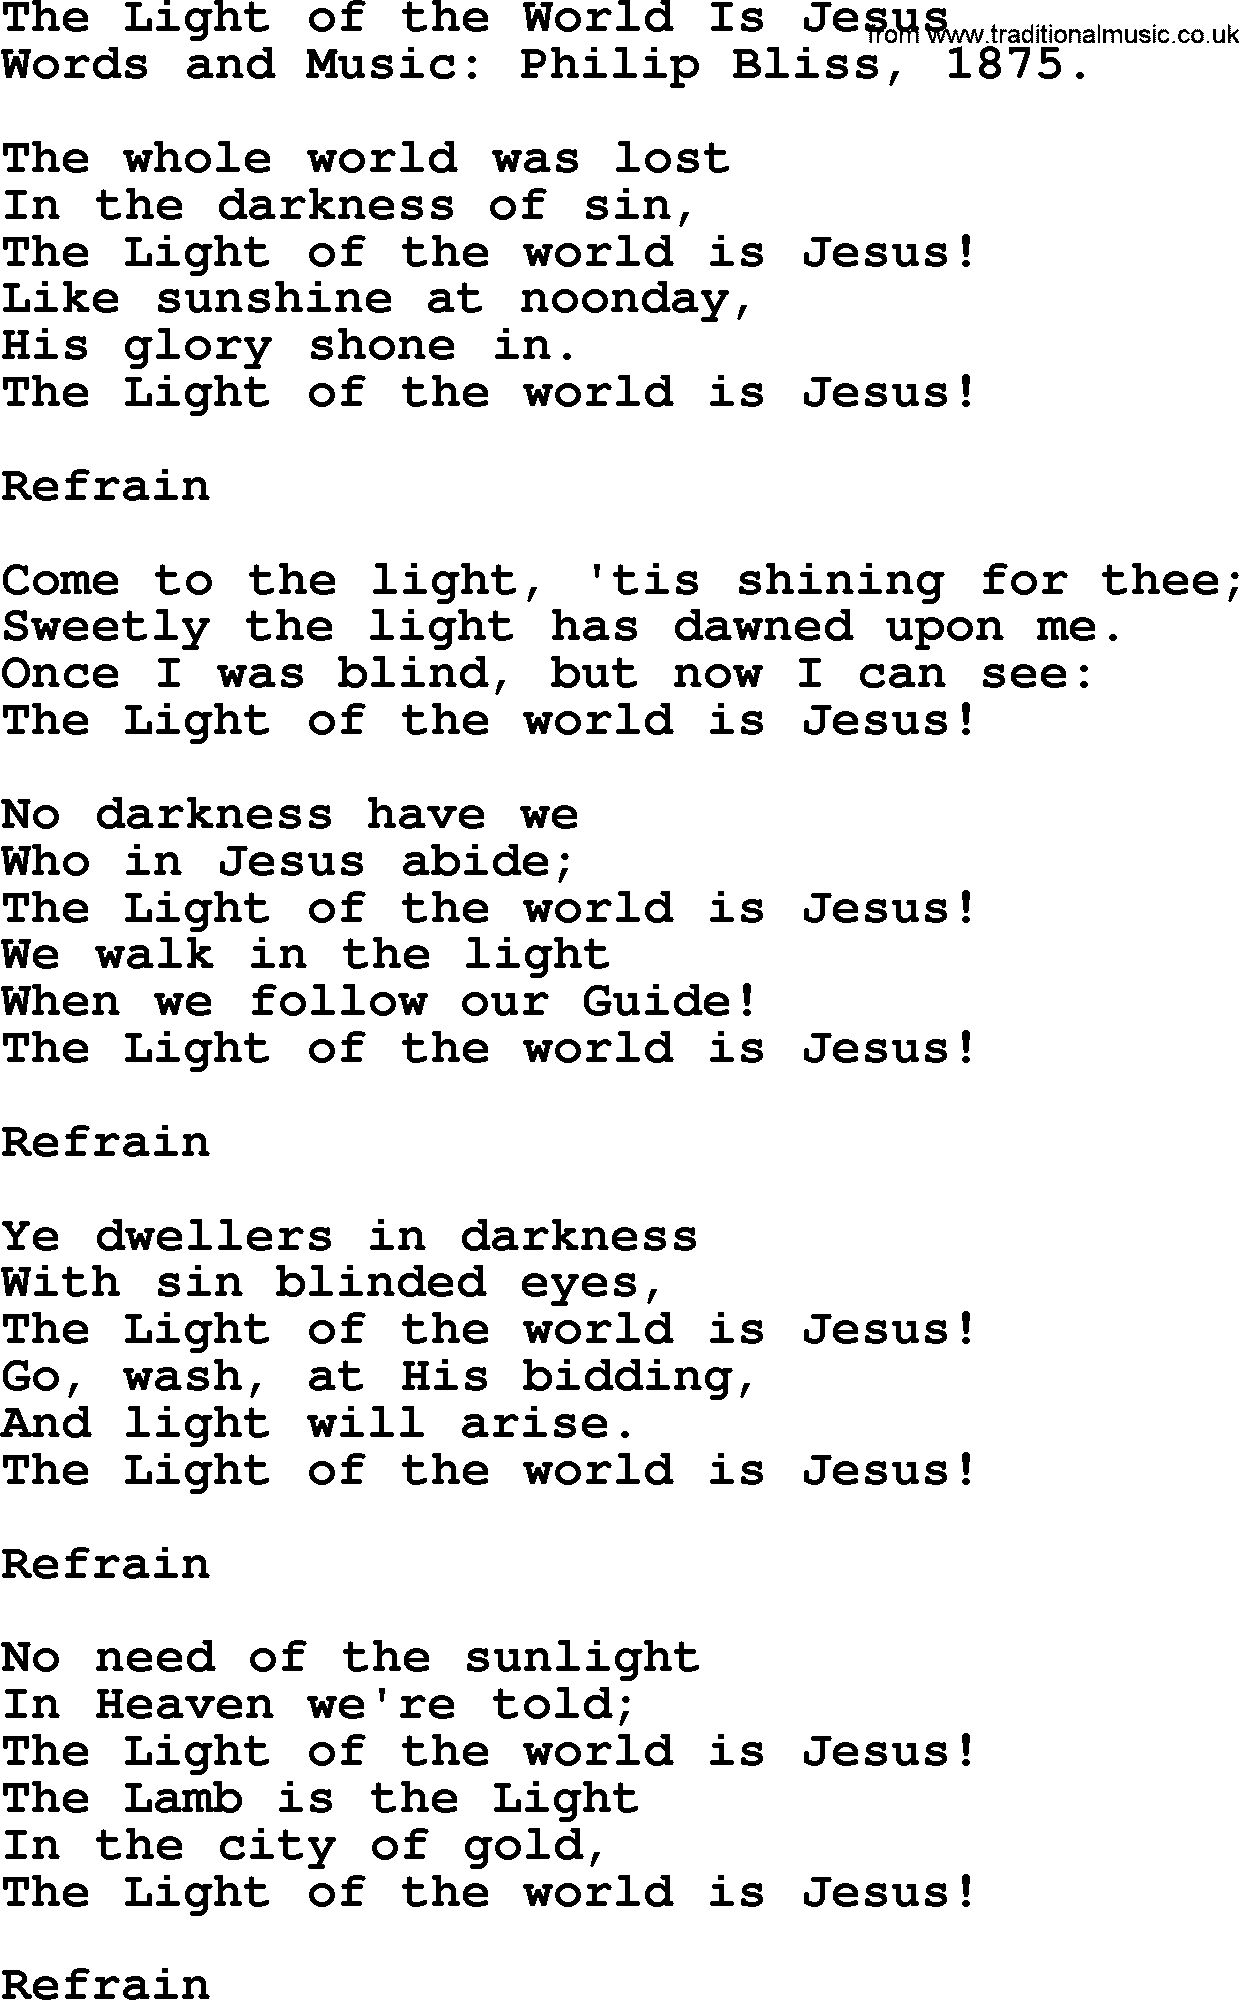 Philip Bliss Song: The Light Of The World Is Jesus, lyrics